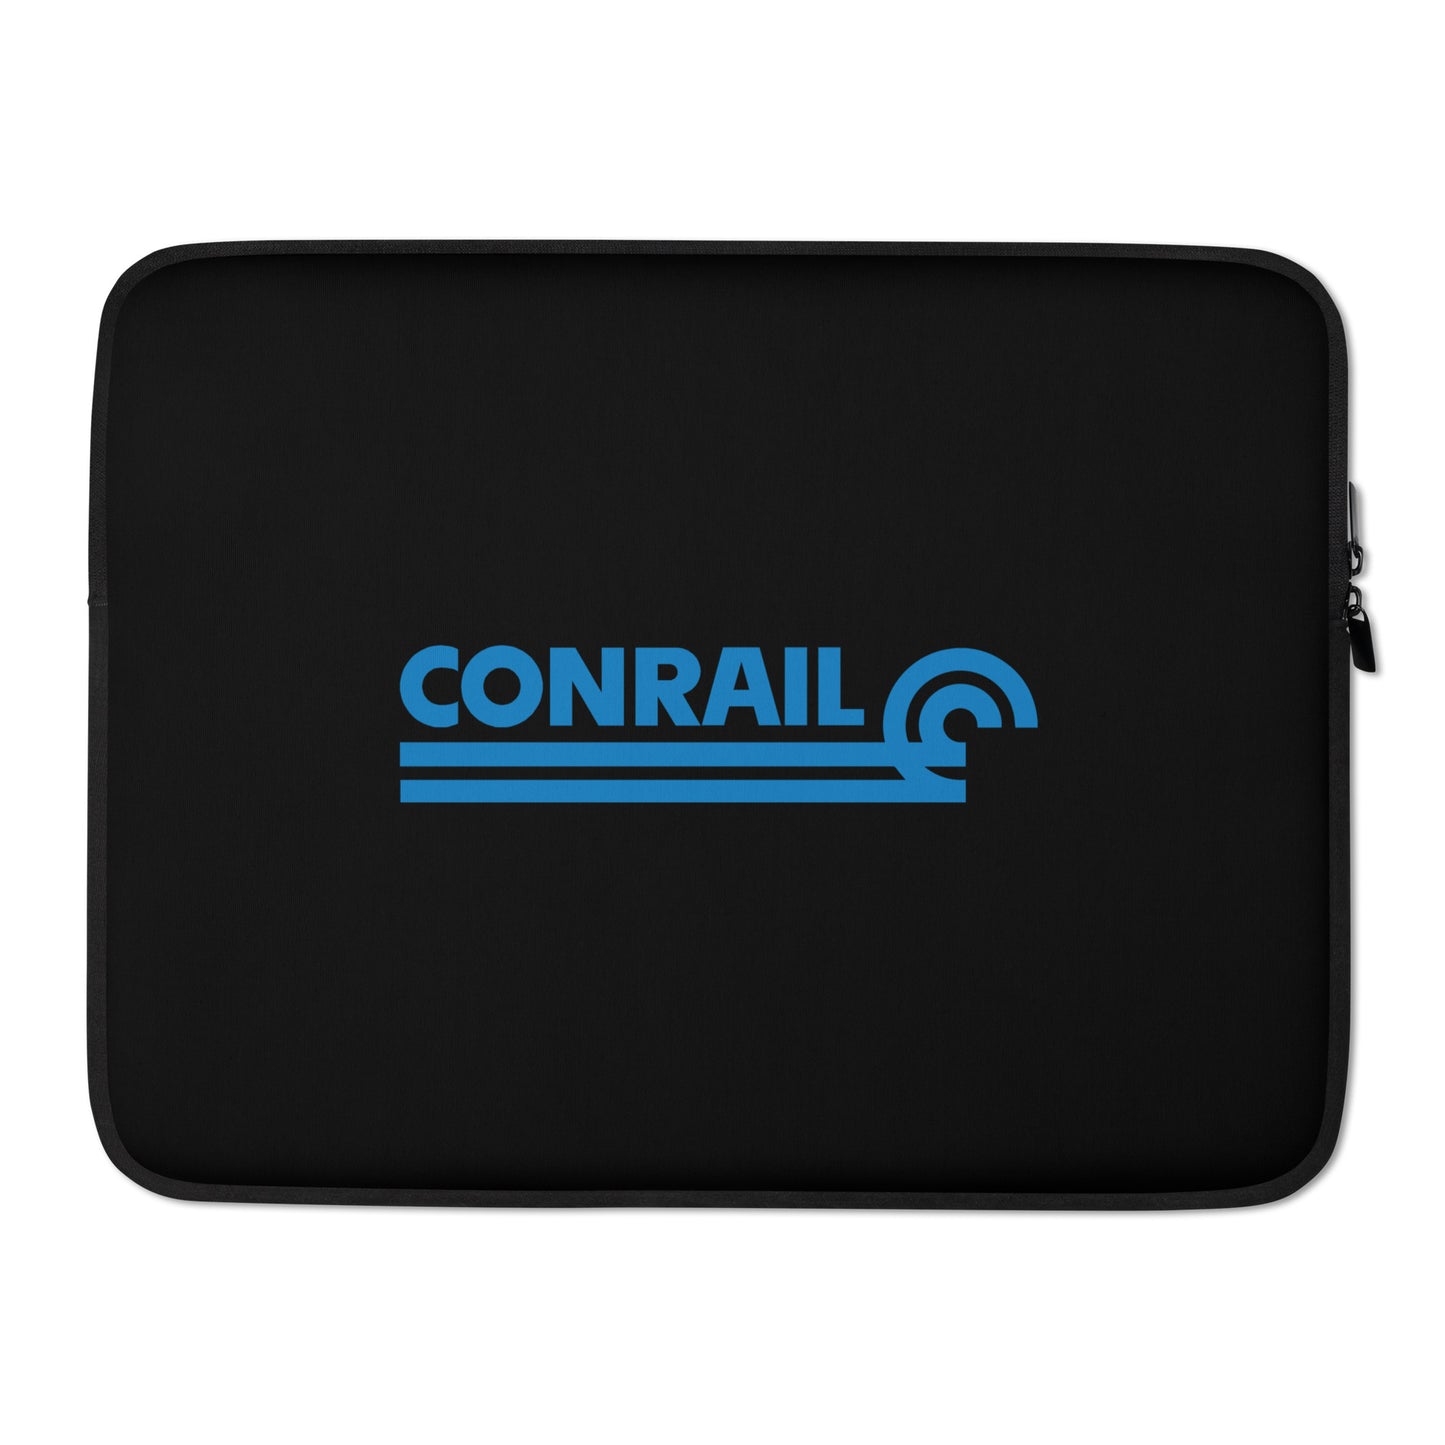 Conrail Laptop Sleeve